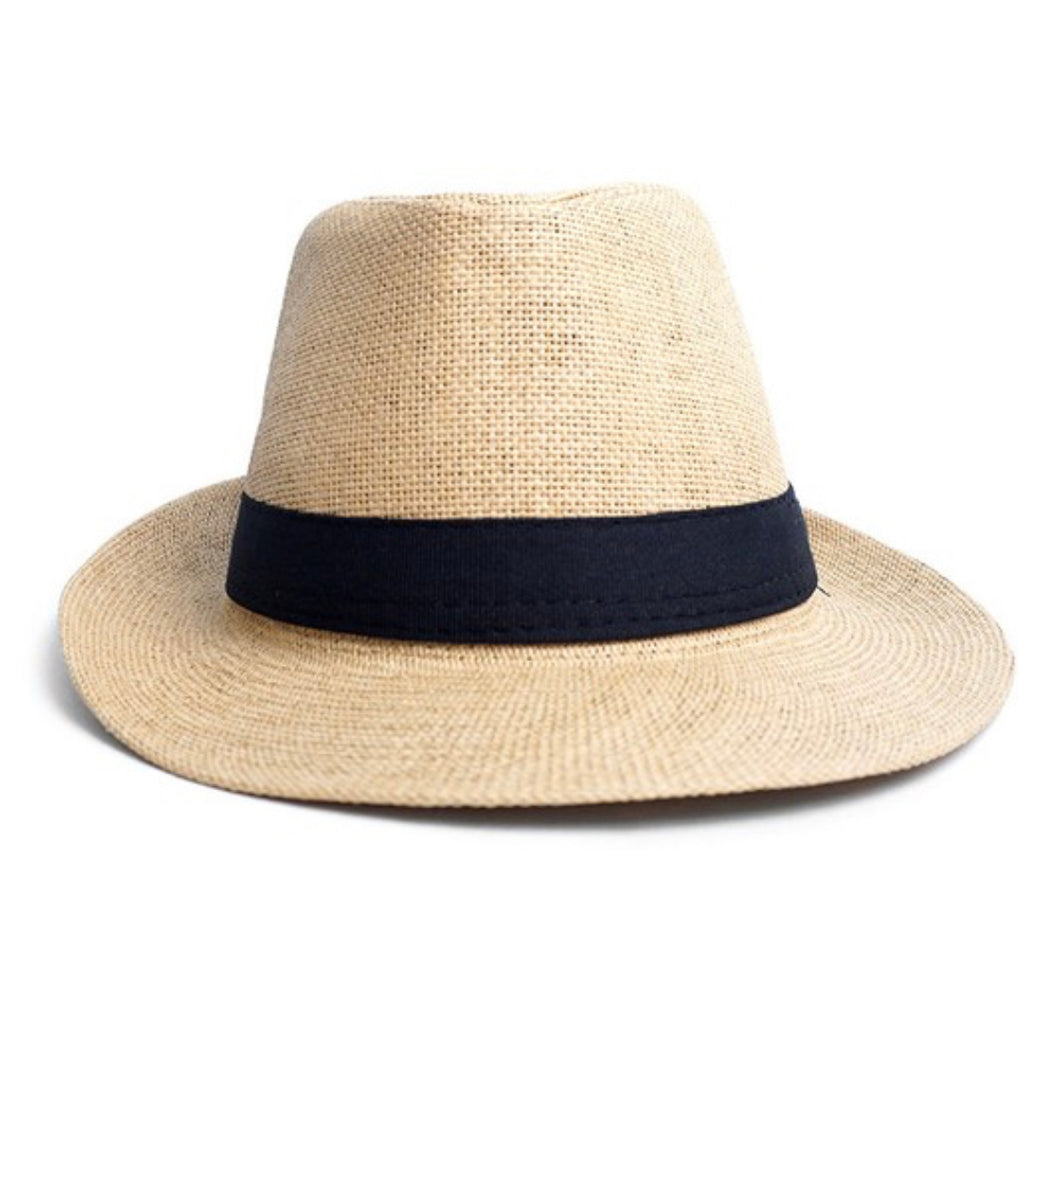 Mens Panama Hat - Straw